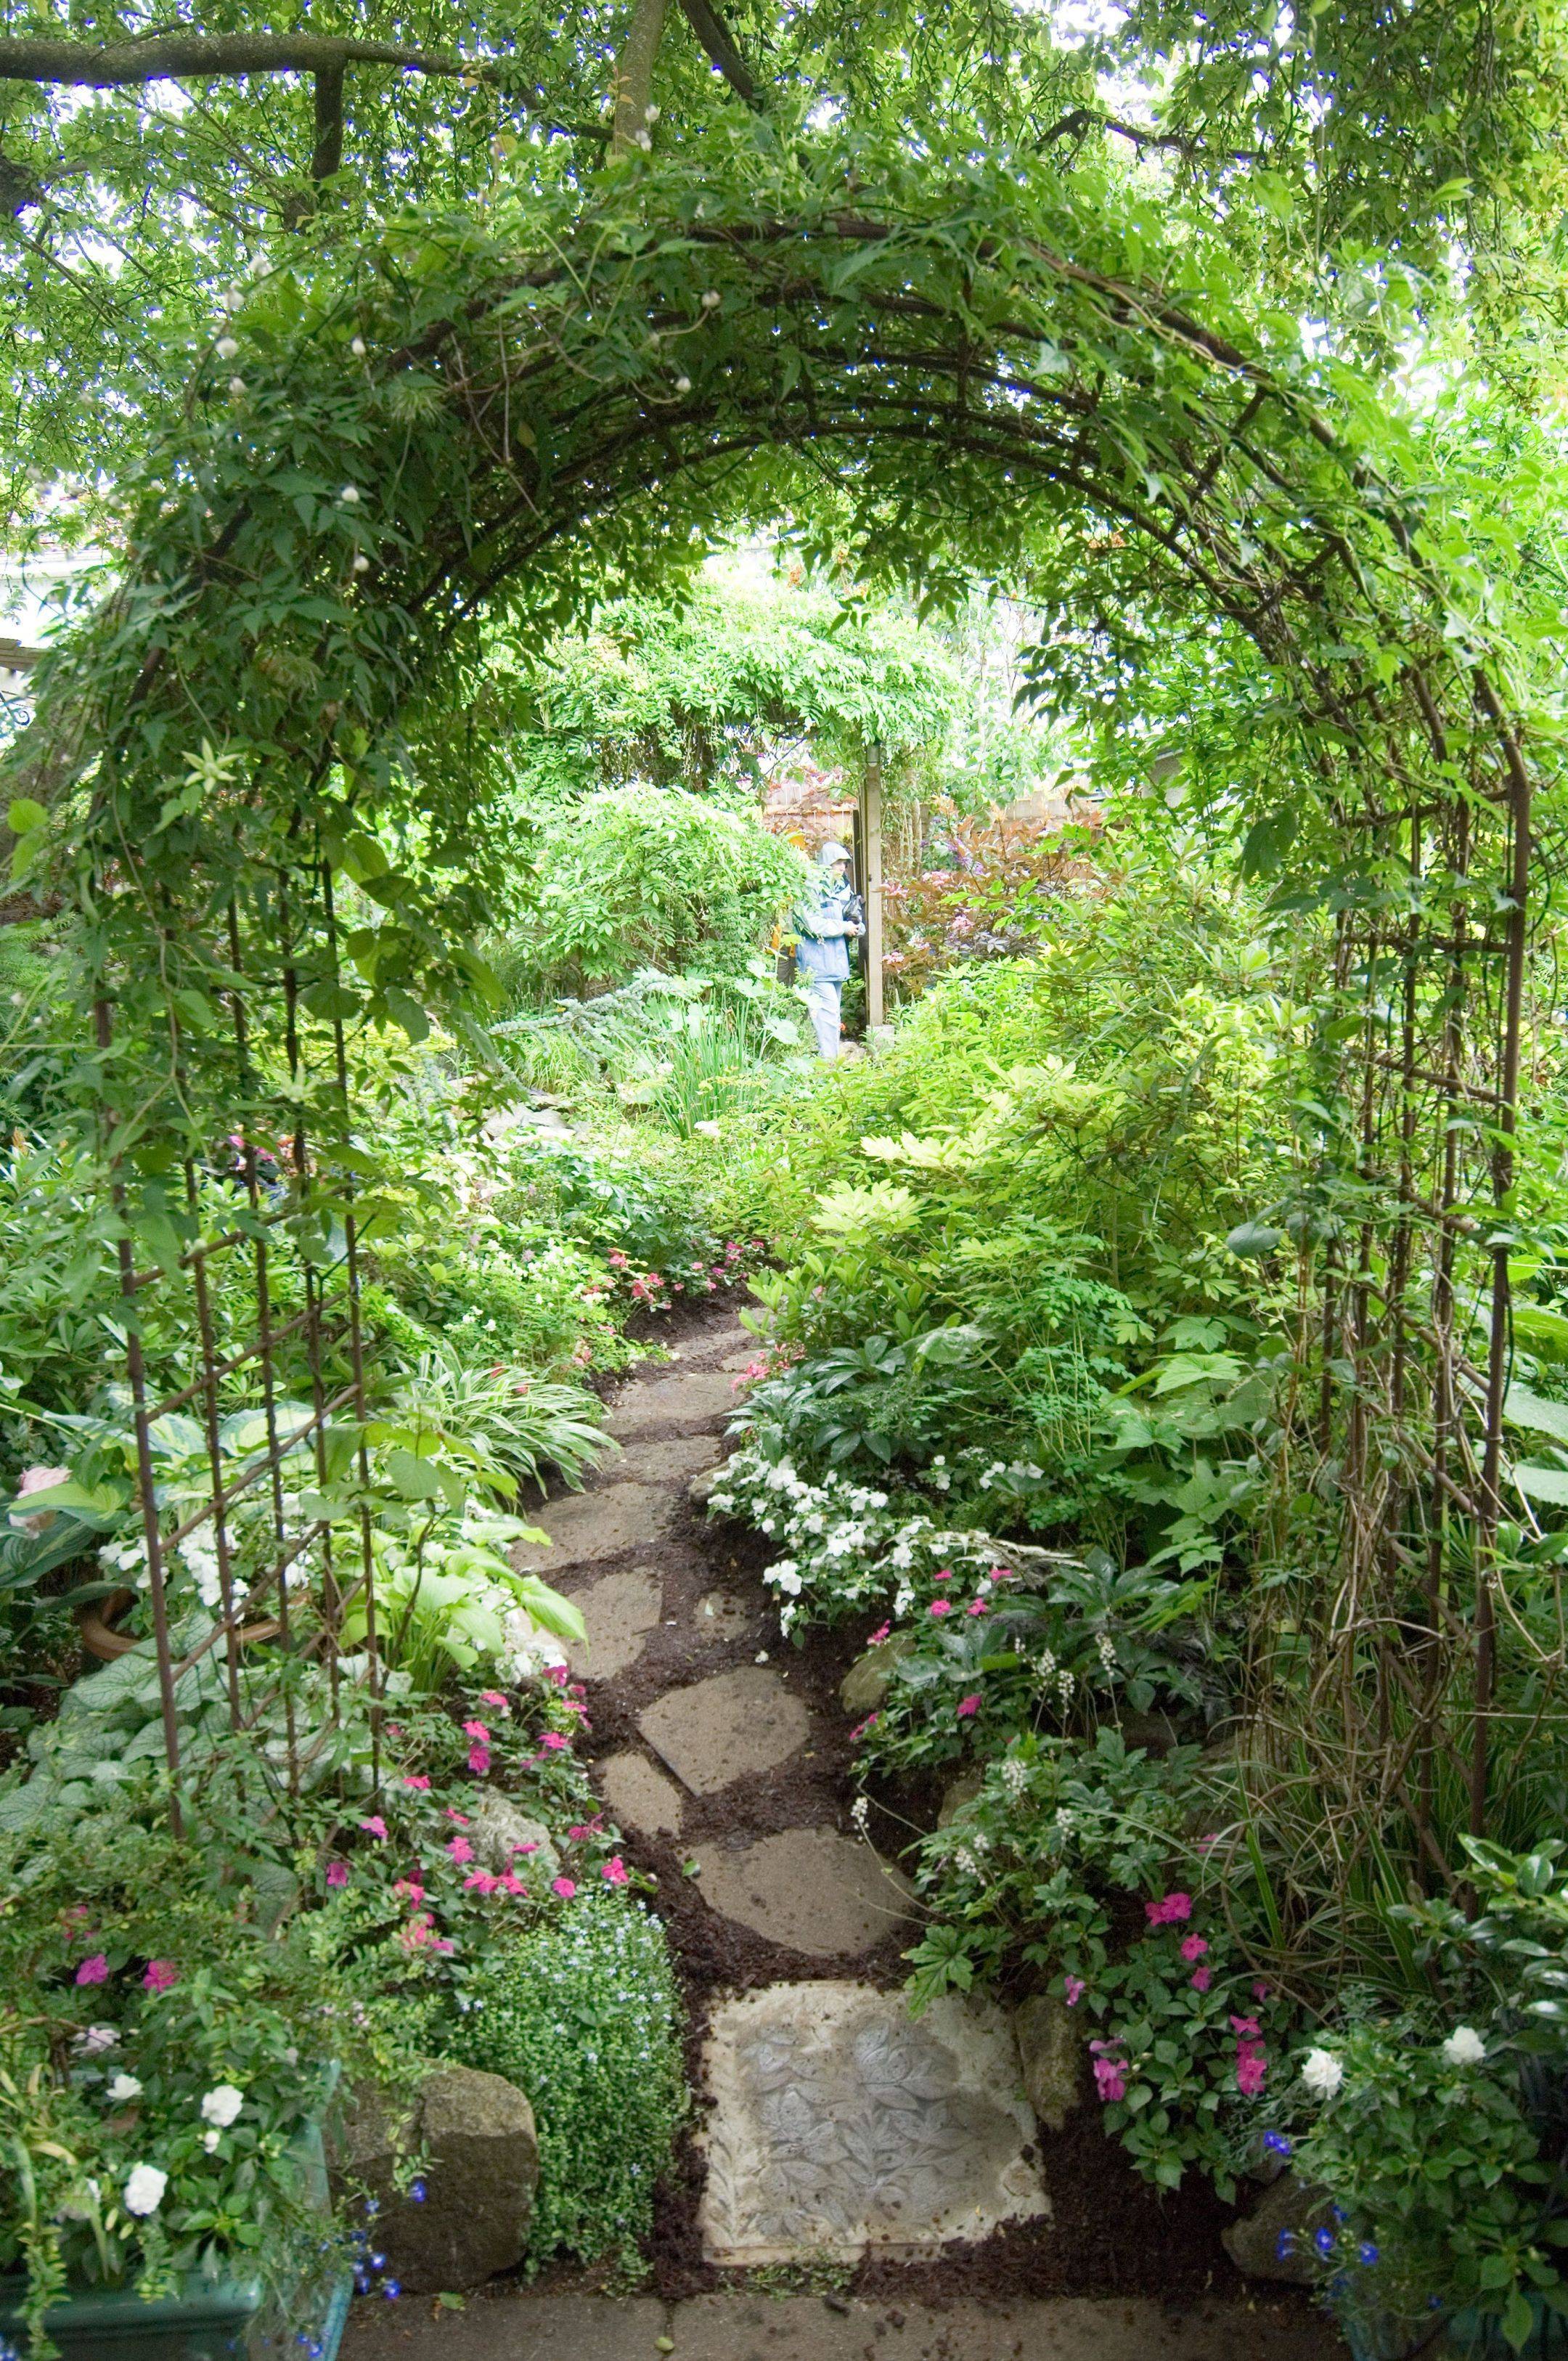 Great Garden Gate Ideas Reusero